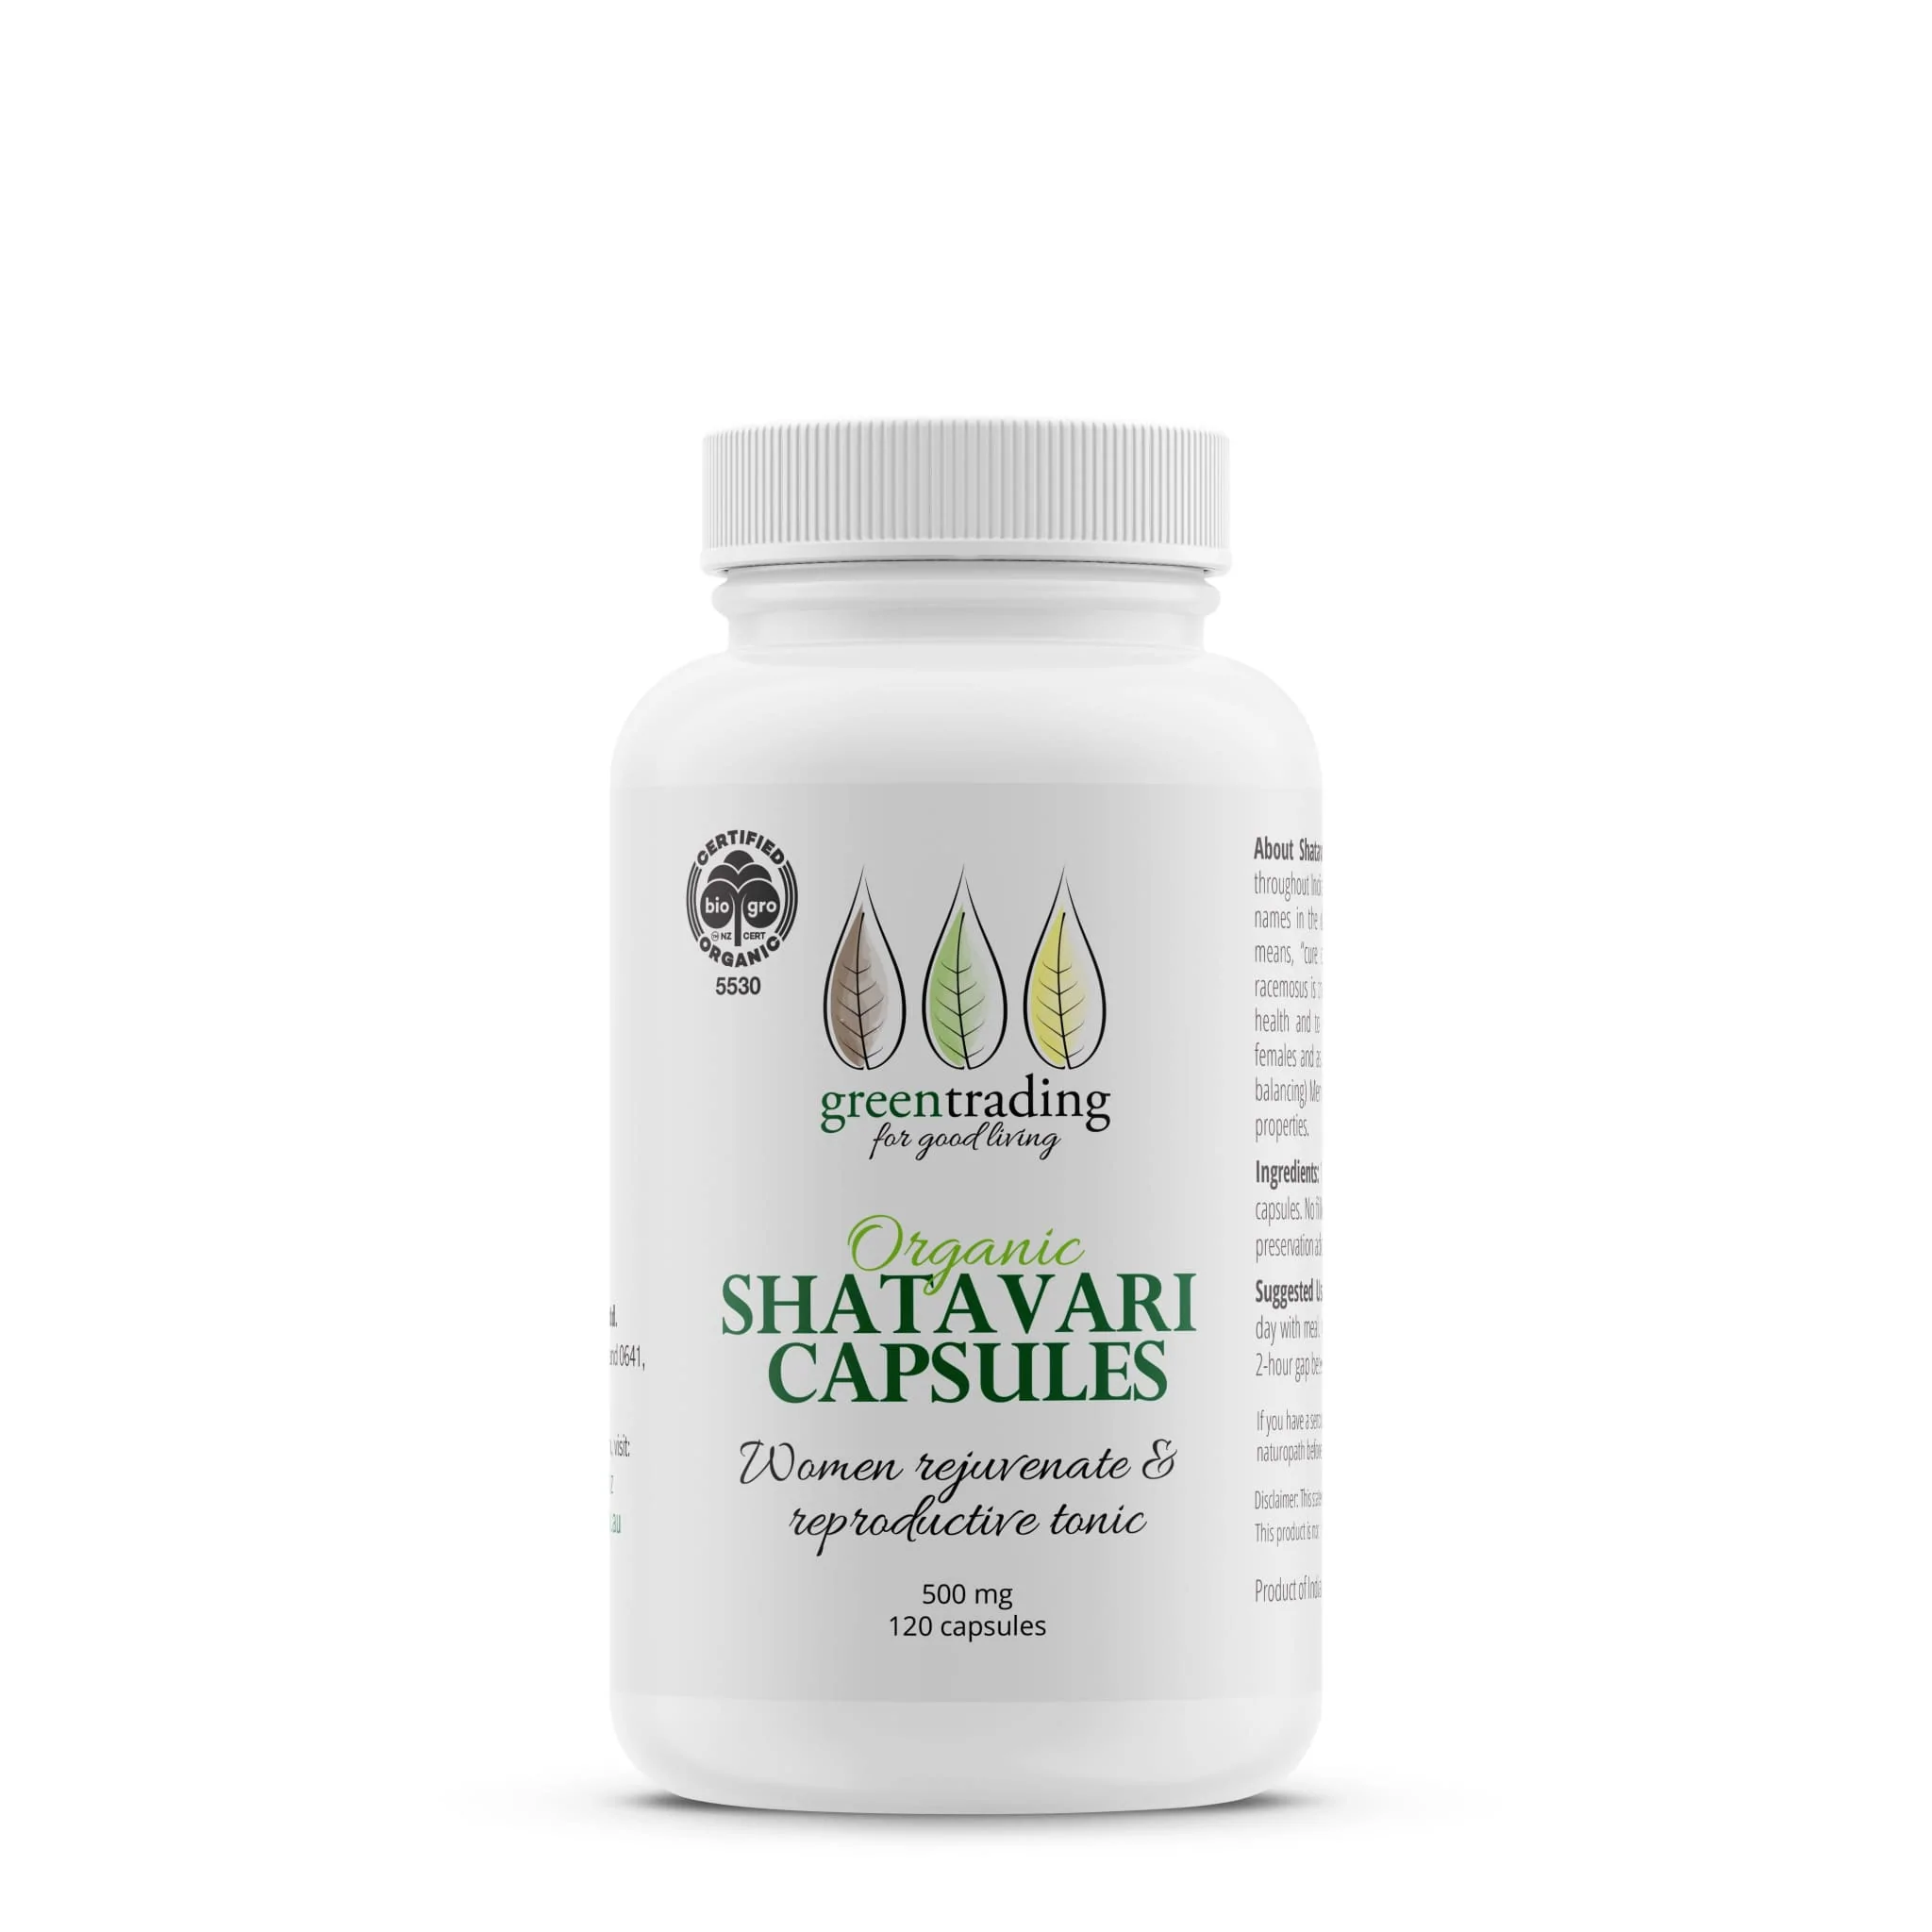 organic-shatavari-capsules-500mg-729132_1024x1024@2x